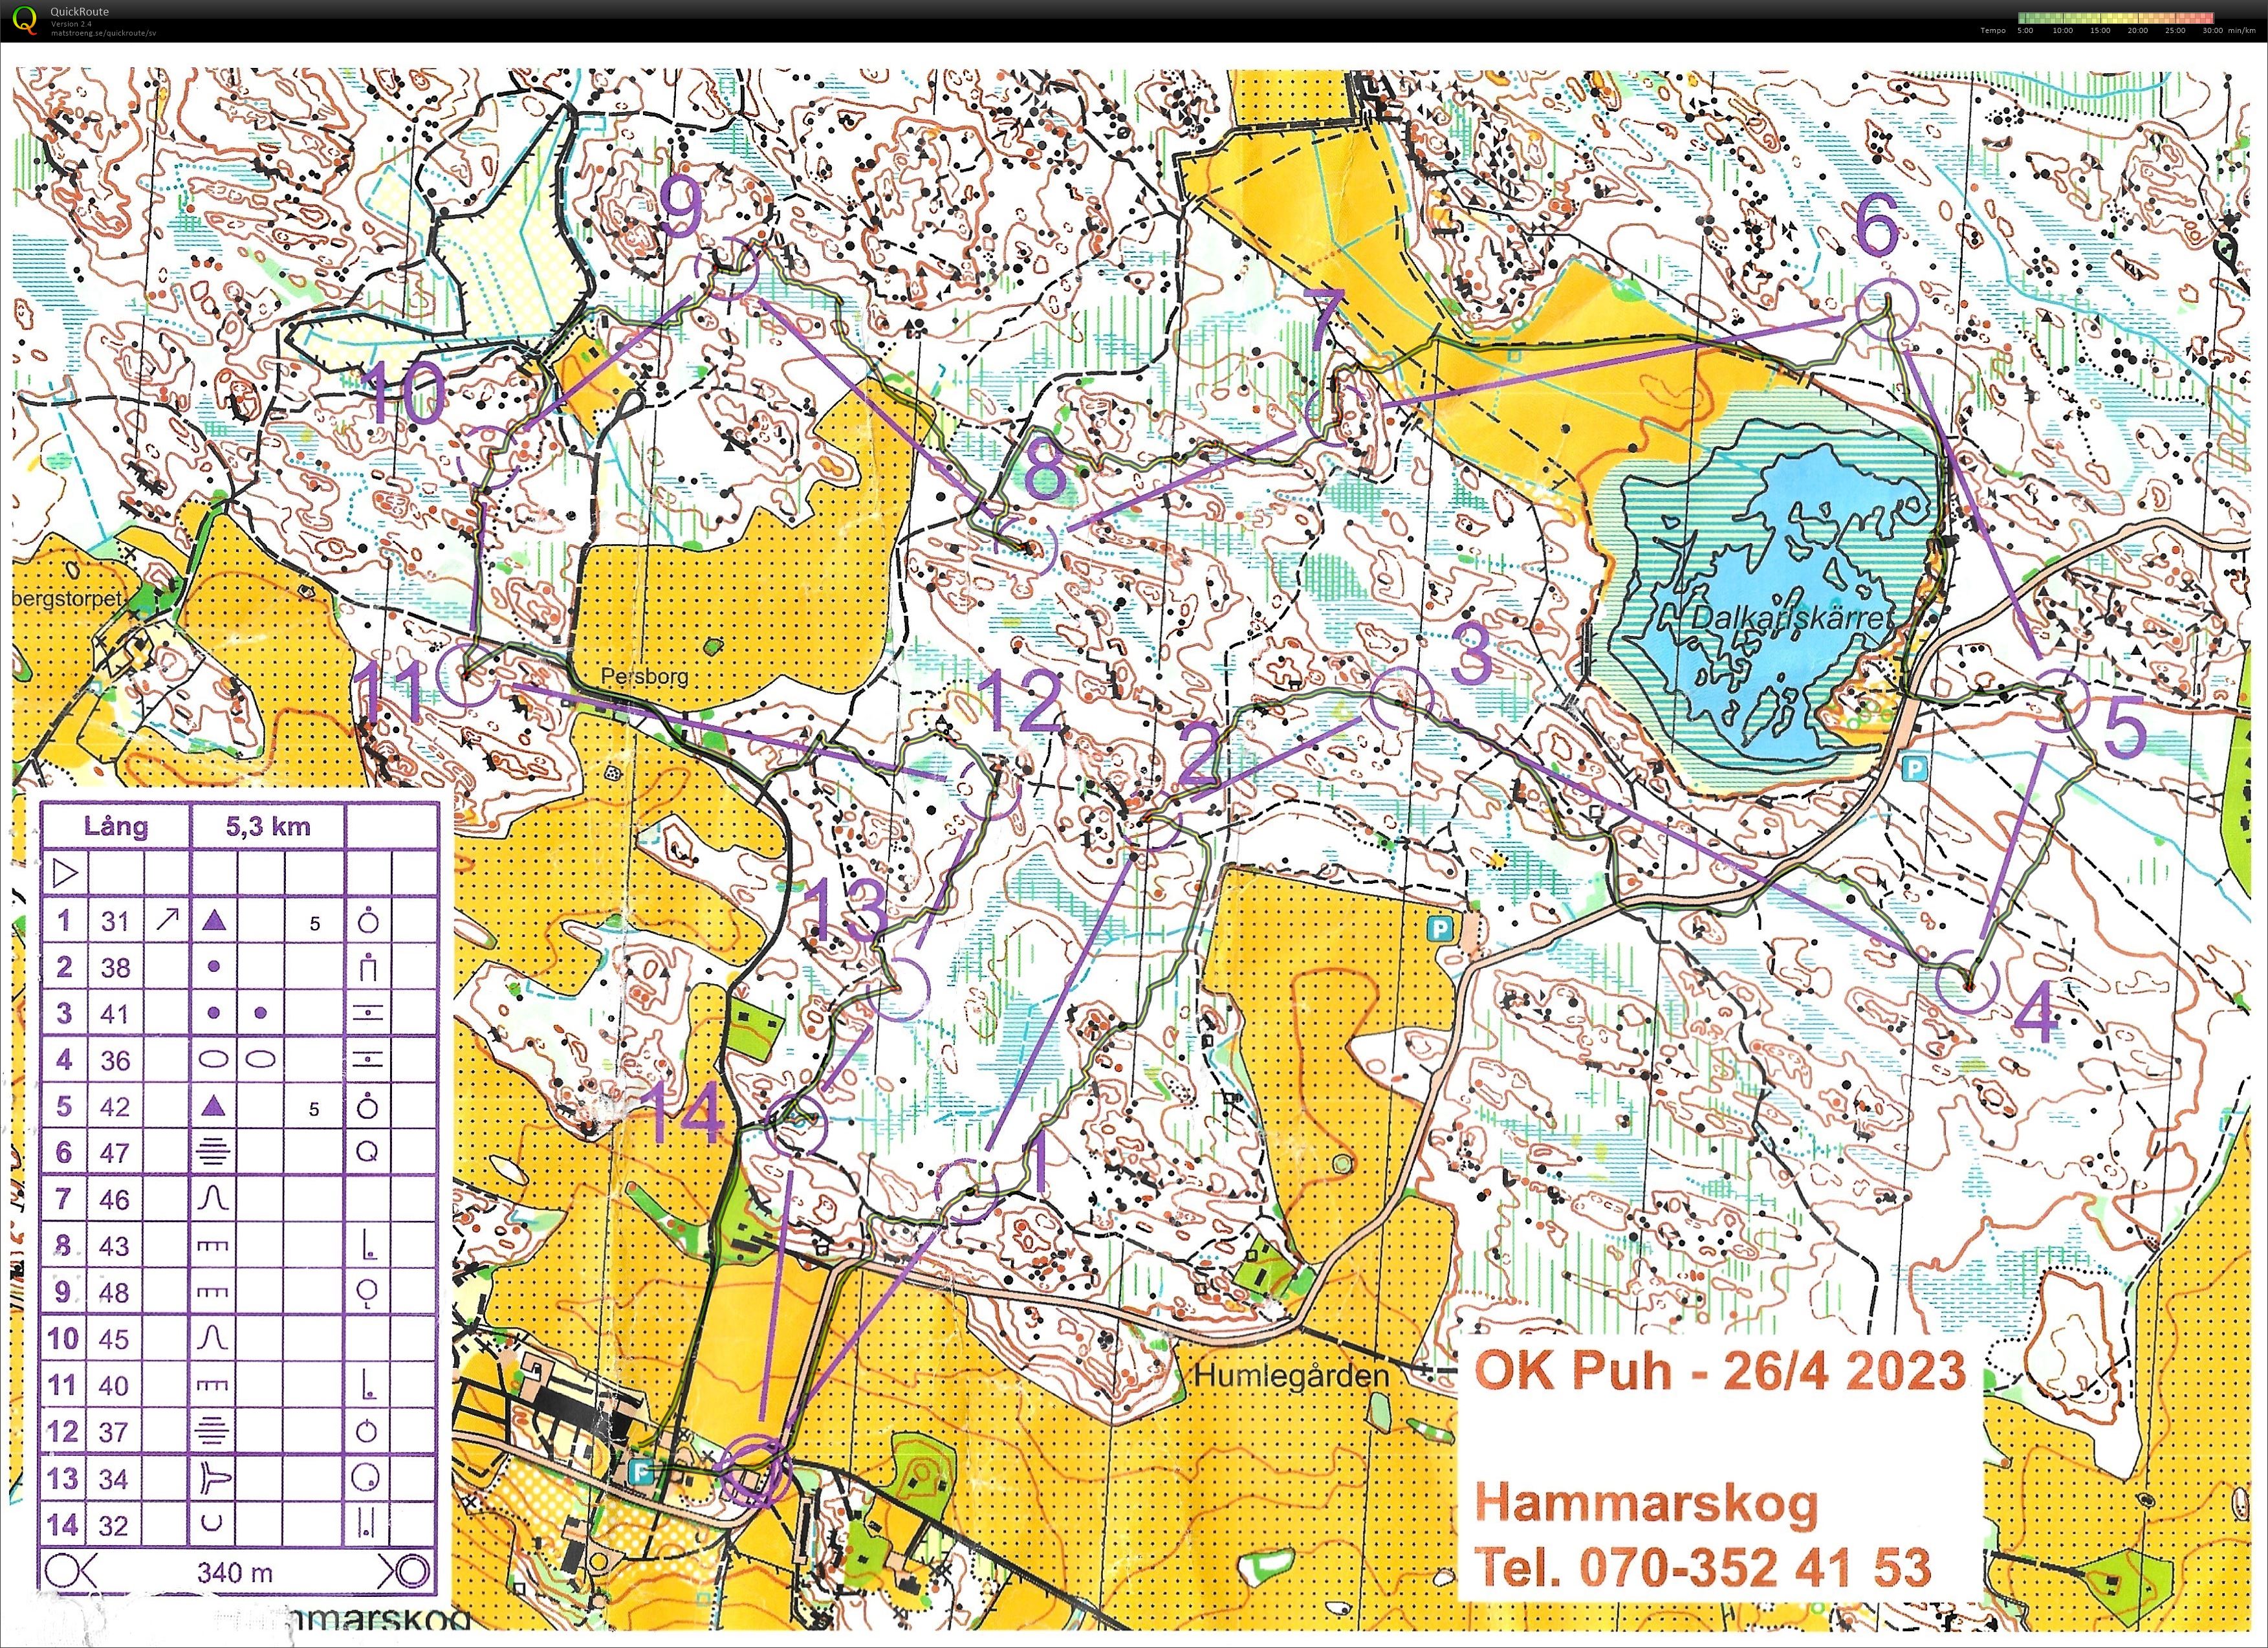 Hammarskog (26-04-2023)